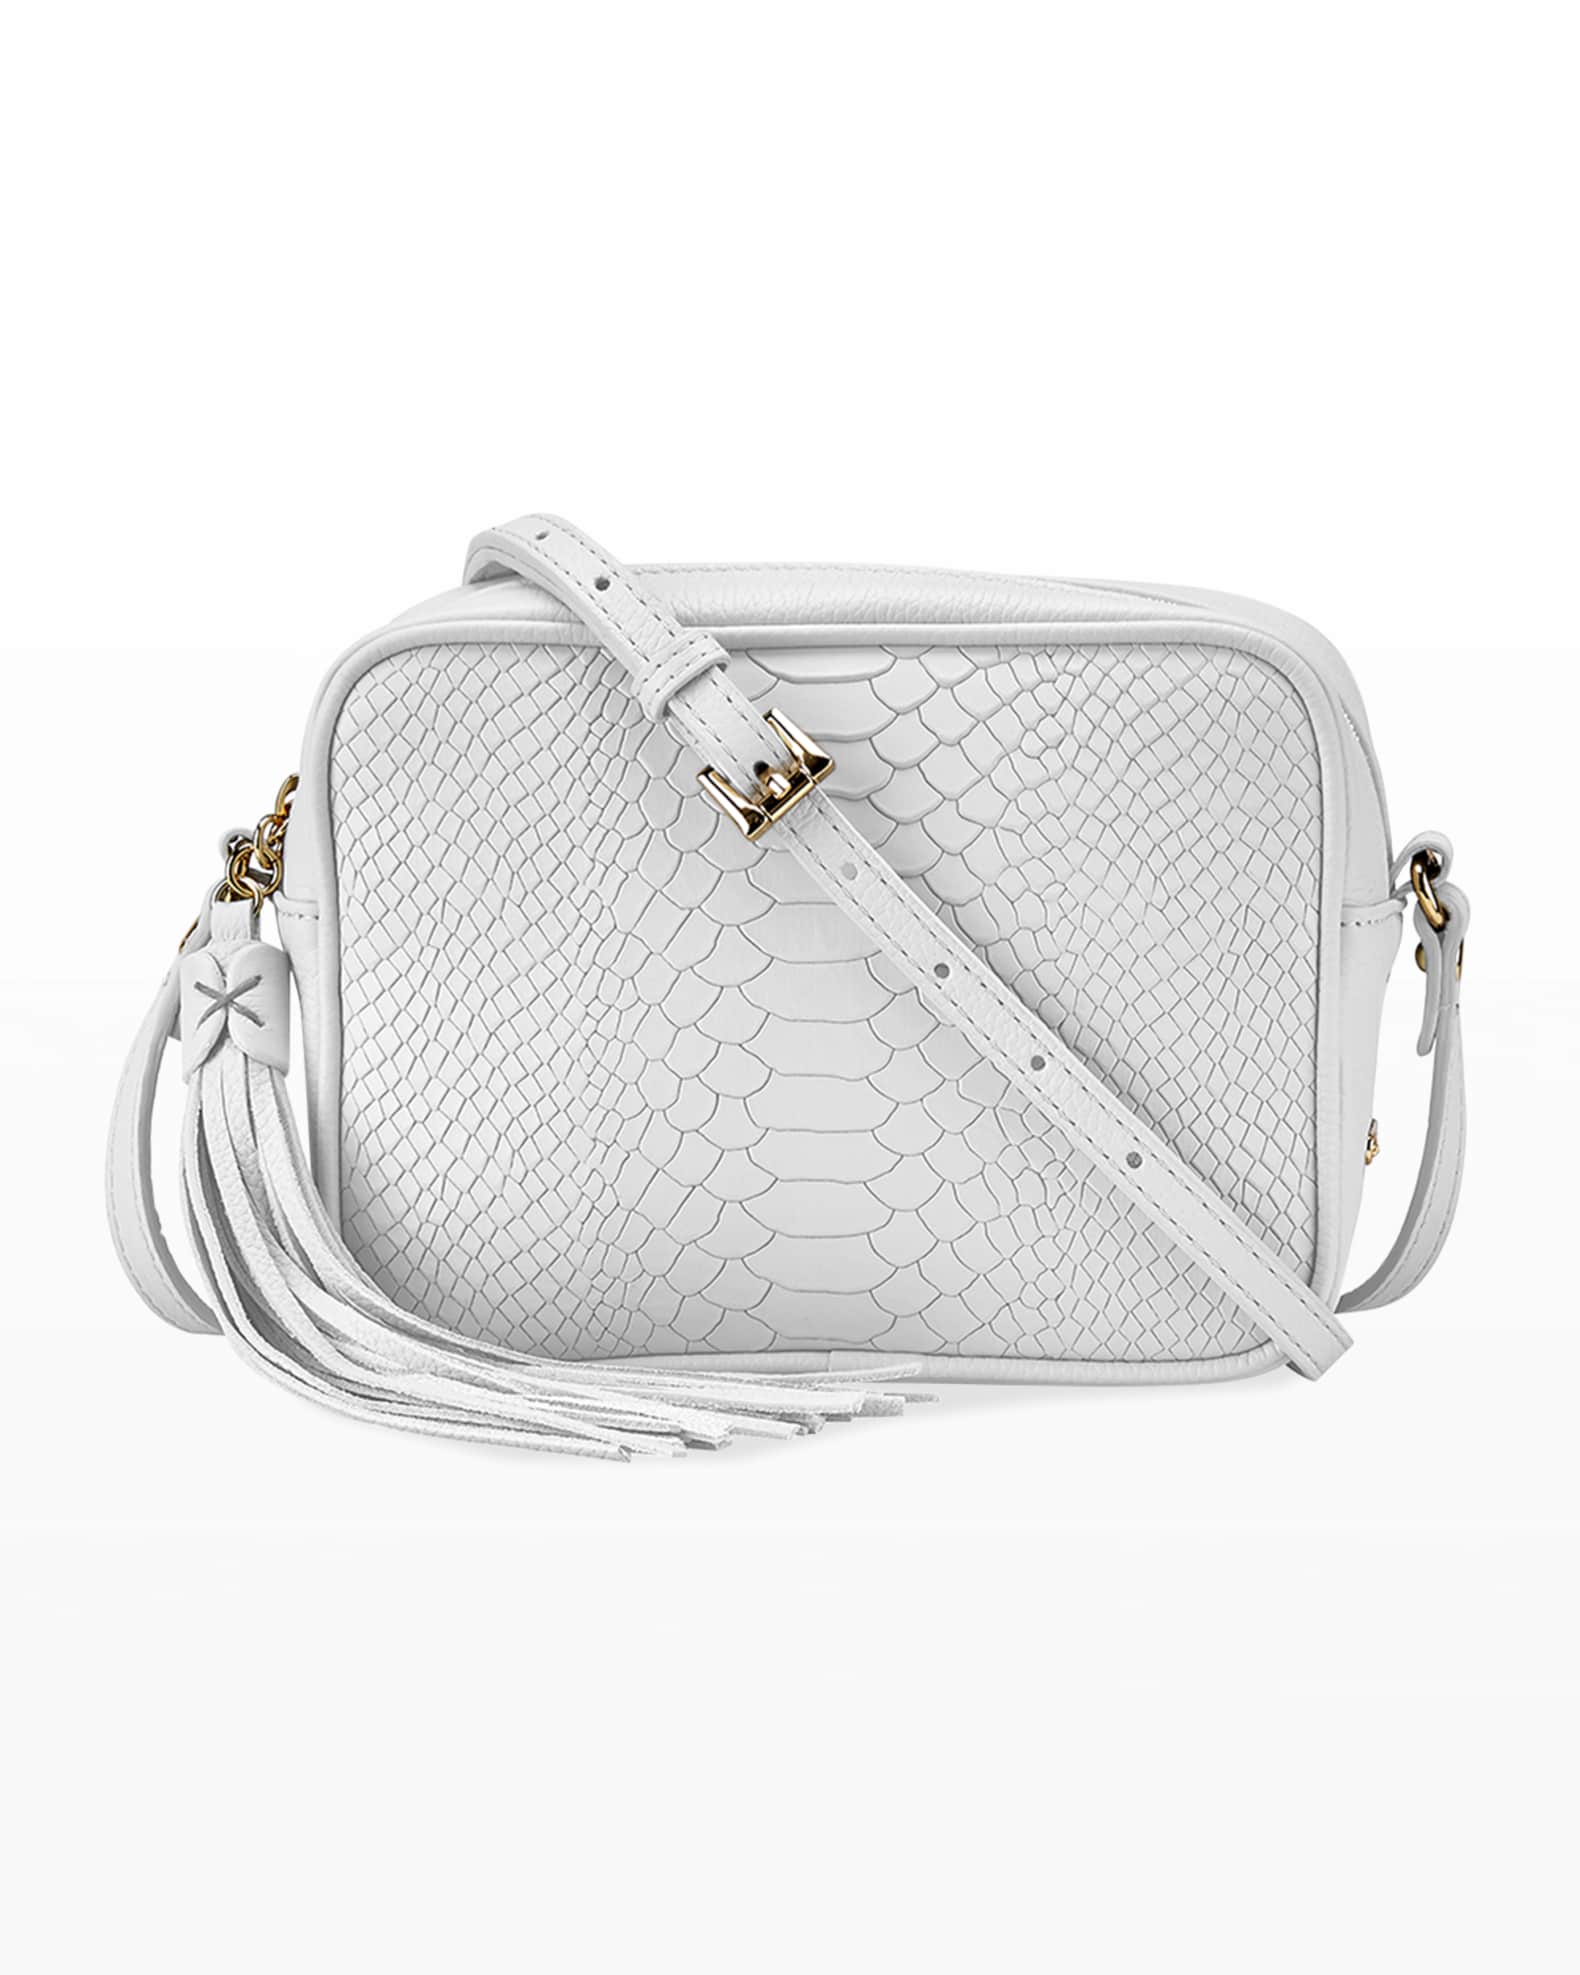 Gigi New York Madison Python-Embossed Leather Crossbody Bag